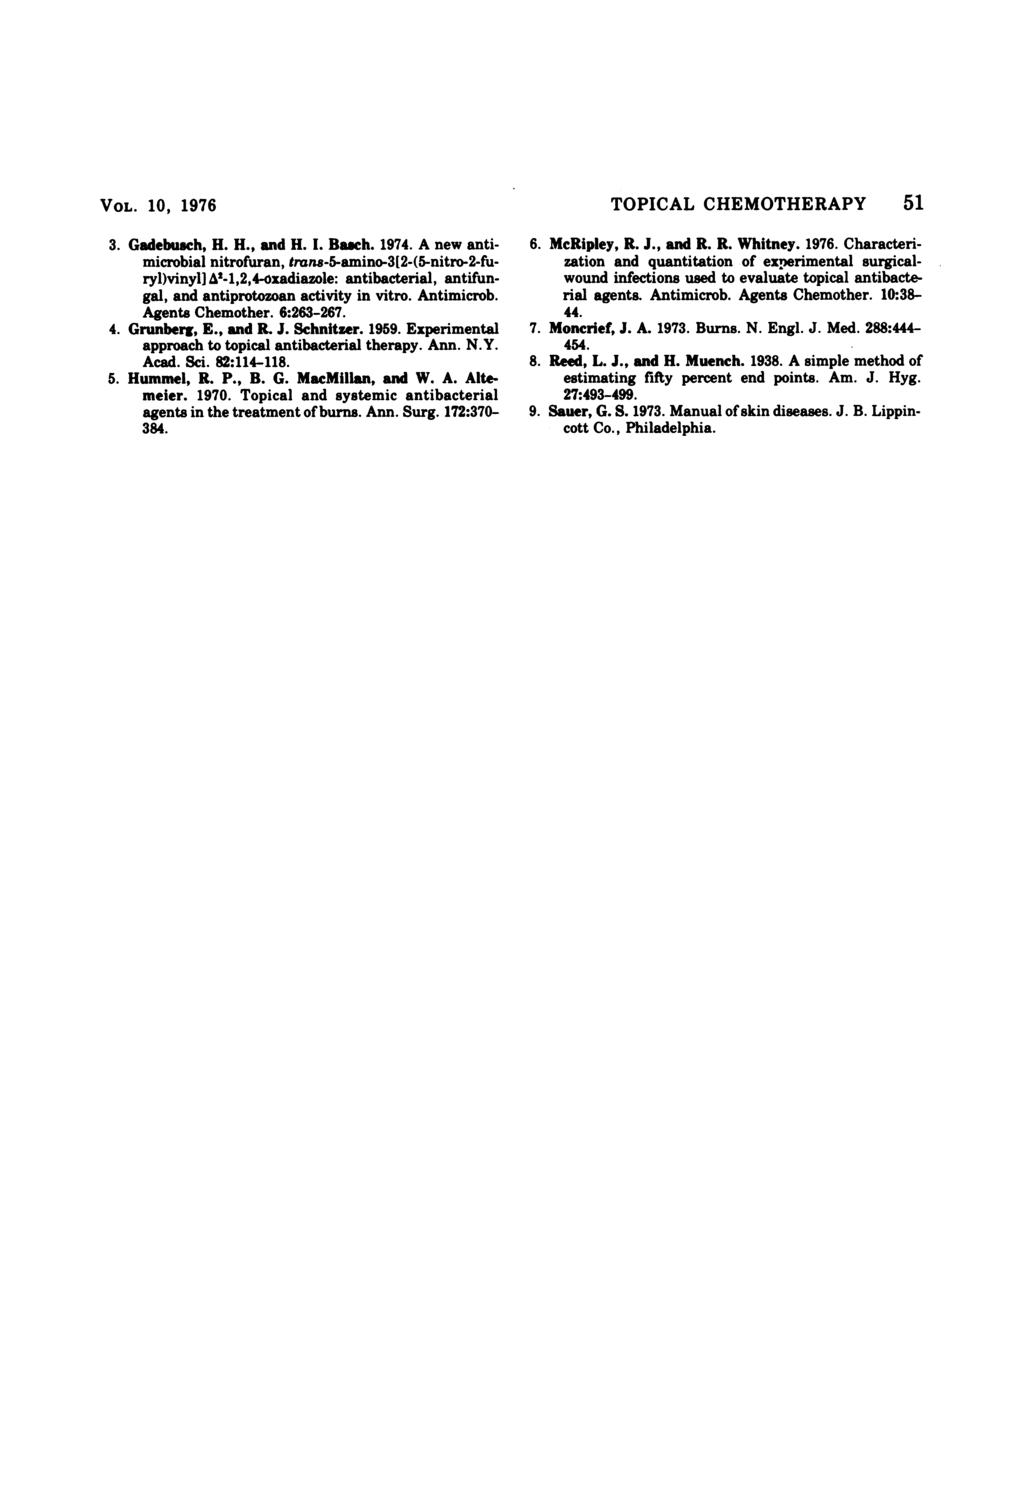 VOL. 10, 1976 TOPICAL CHEMOTHERAPY 51 3. Gadebusch, H. H., and H. I. Baich. 1974. A new antimicrobial nitrofuran, tran.